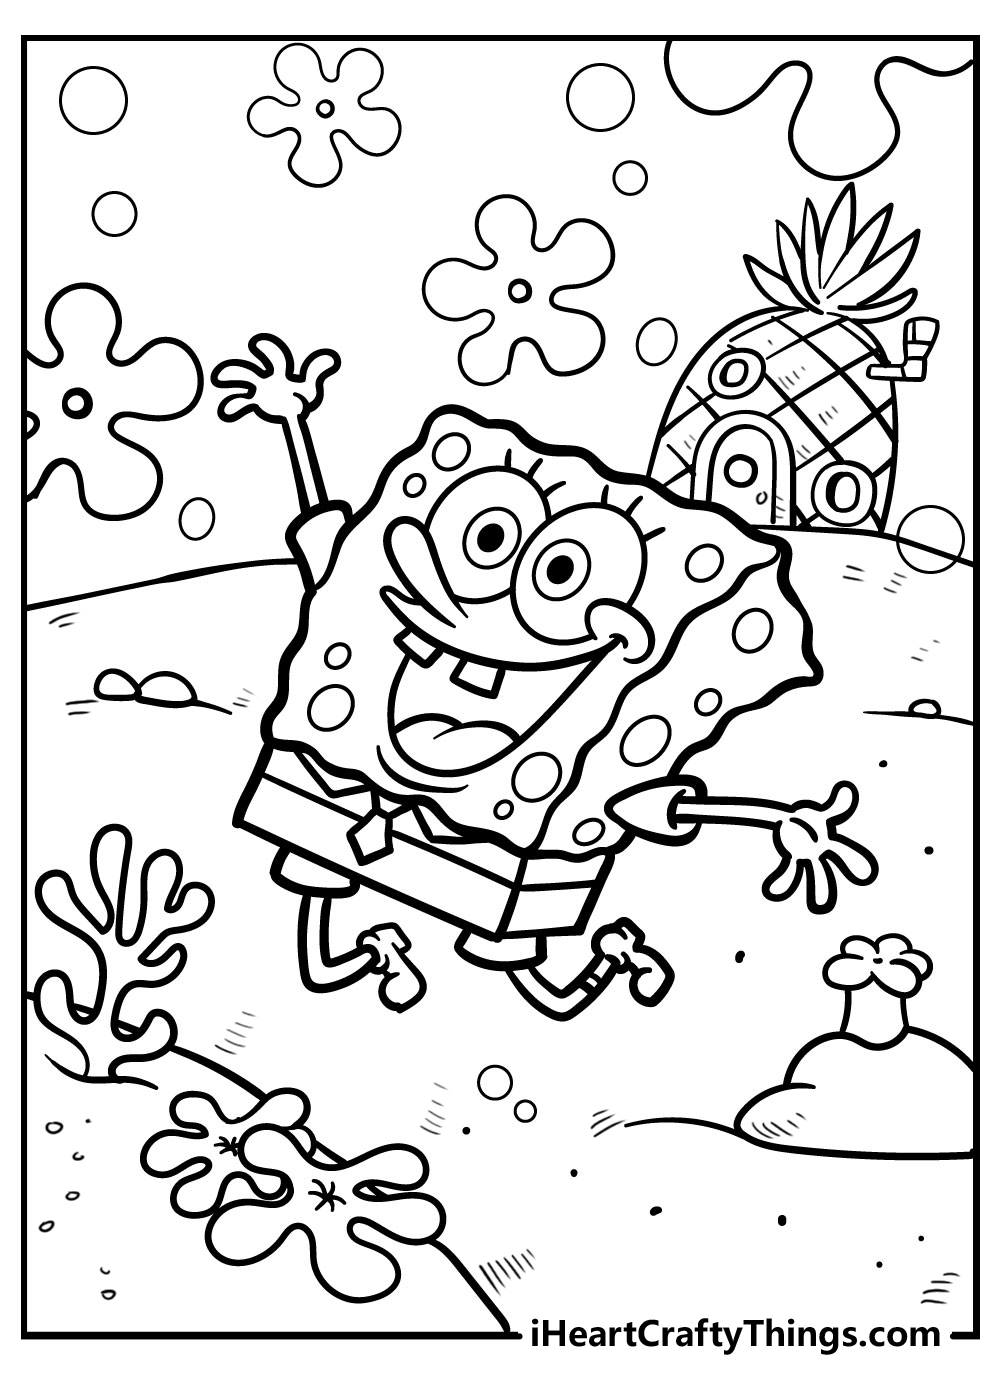 Download 20 Super Fun Spongebob Coloring Pages